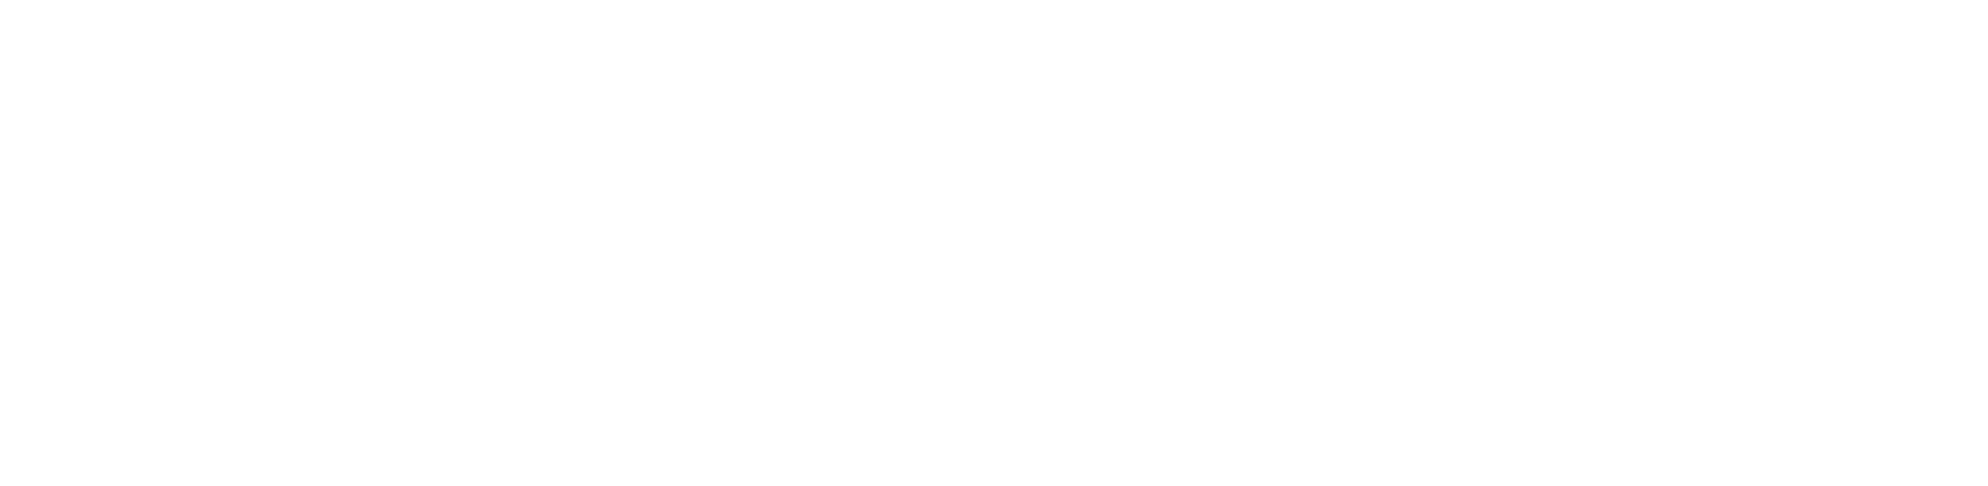 black point logo